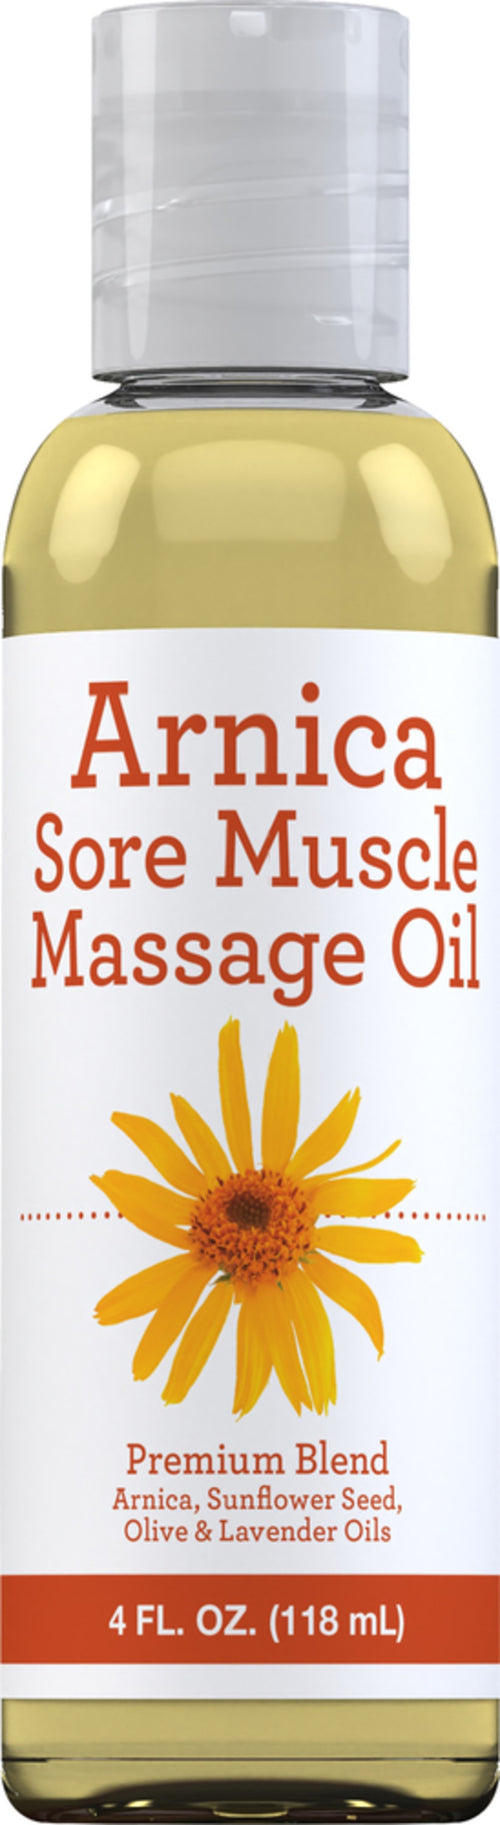 Arnica massage-olie 4 fl oz 118 mL Fles    